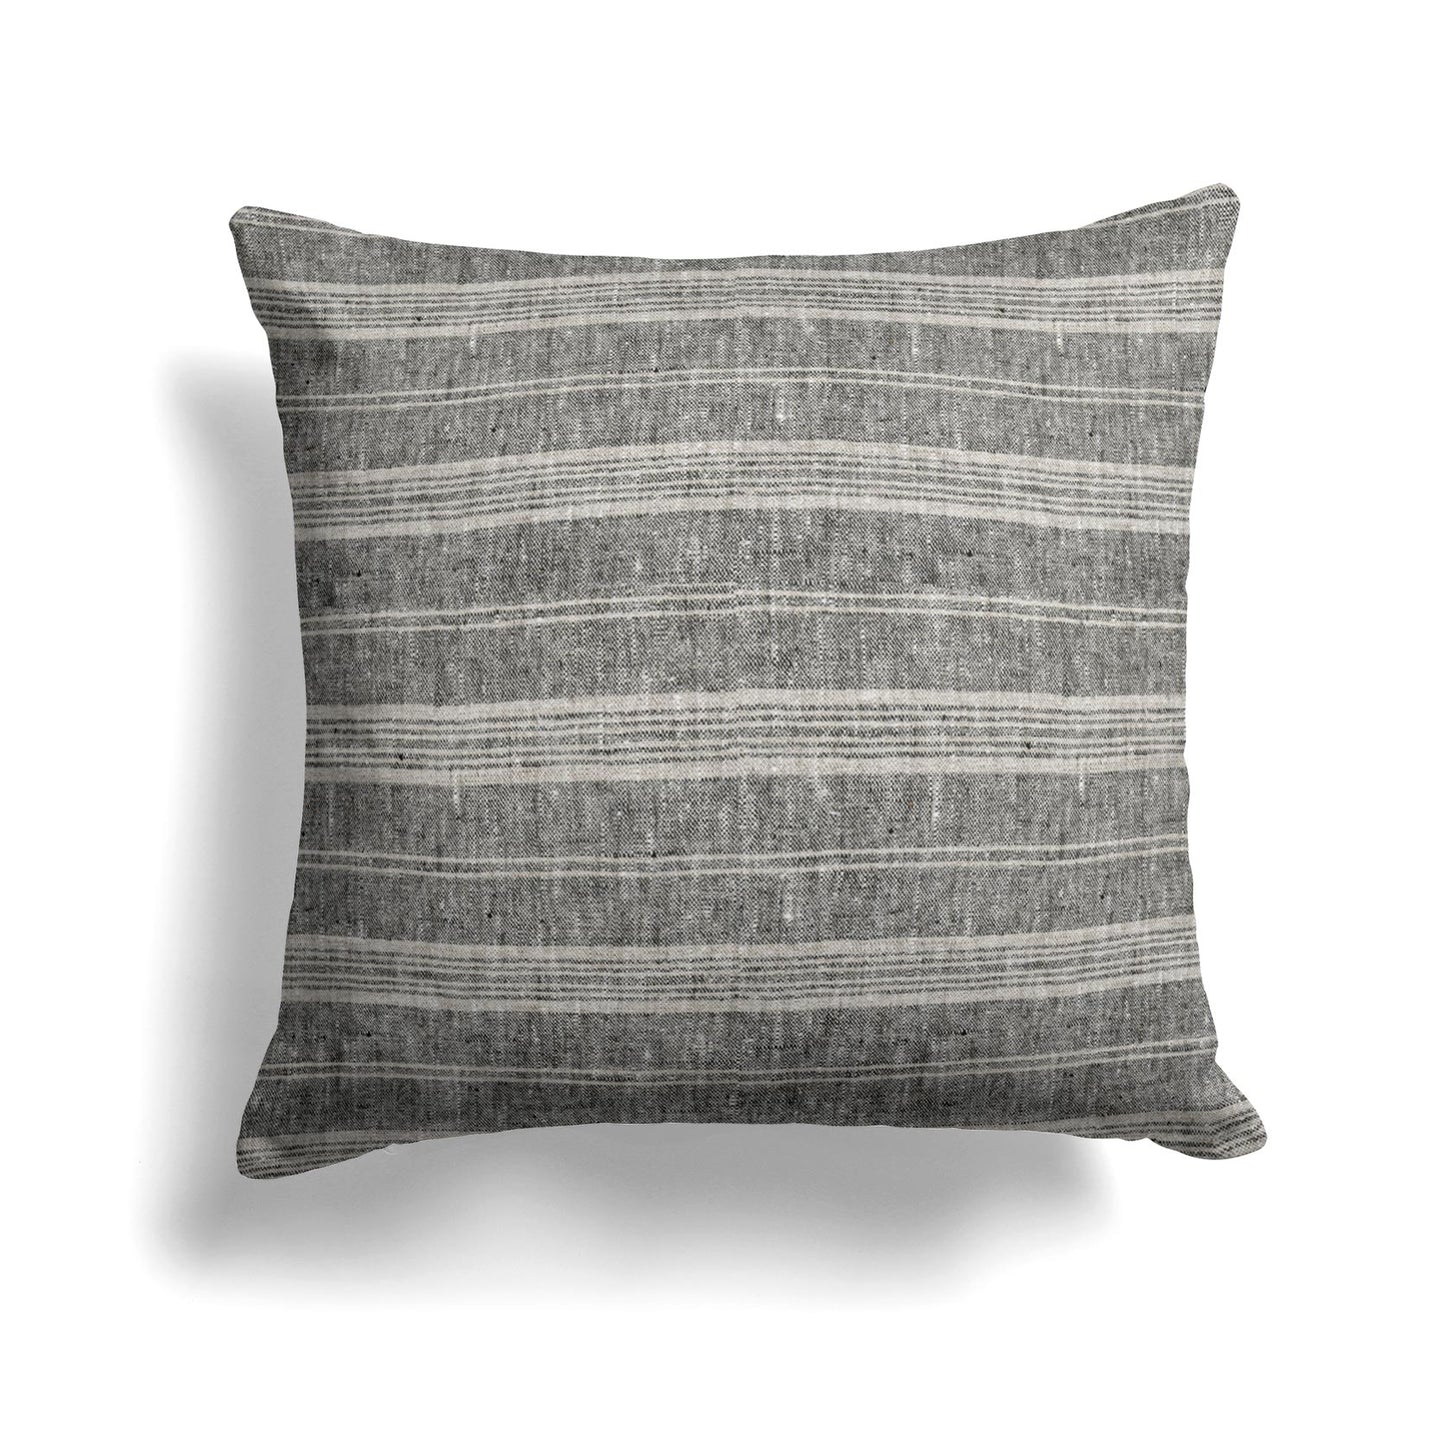 Multistripe Linen Pillow Cover in Black